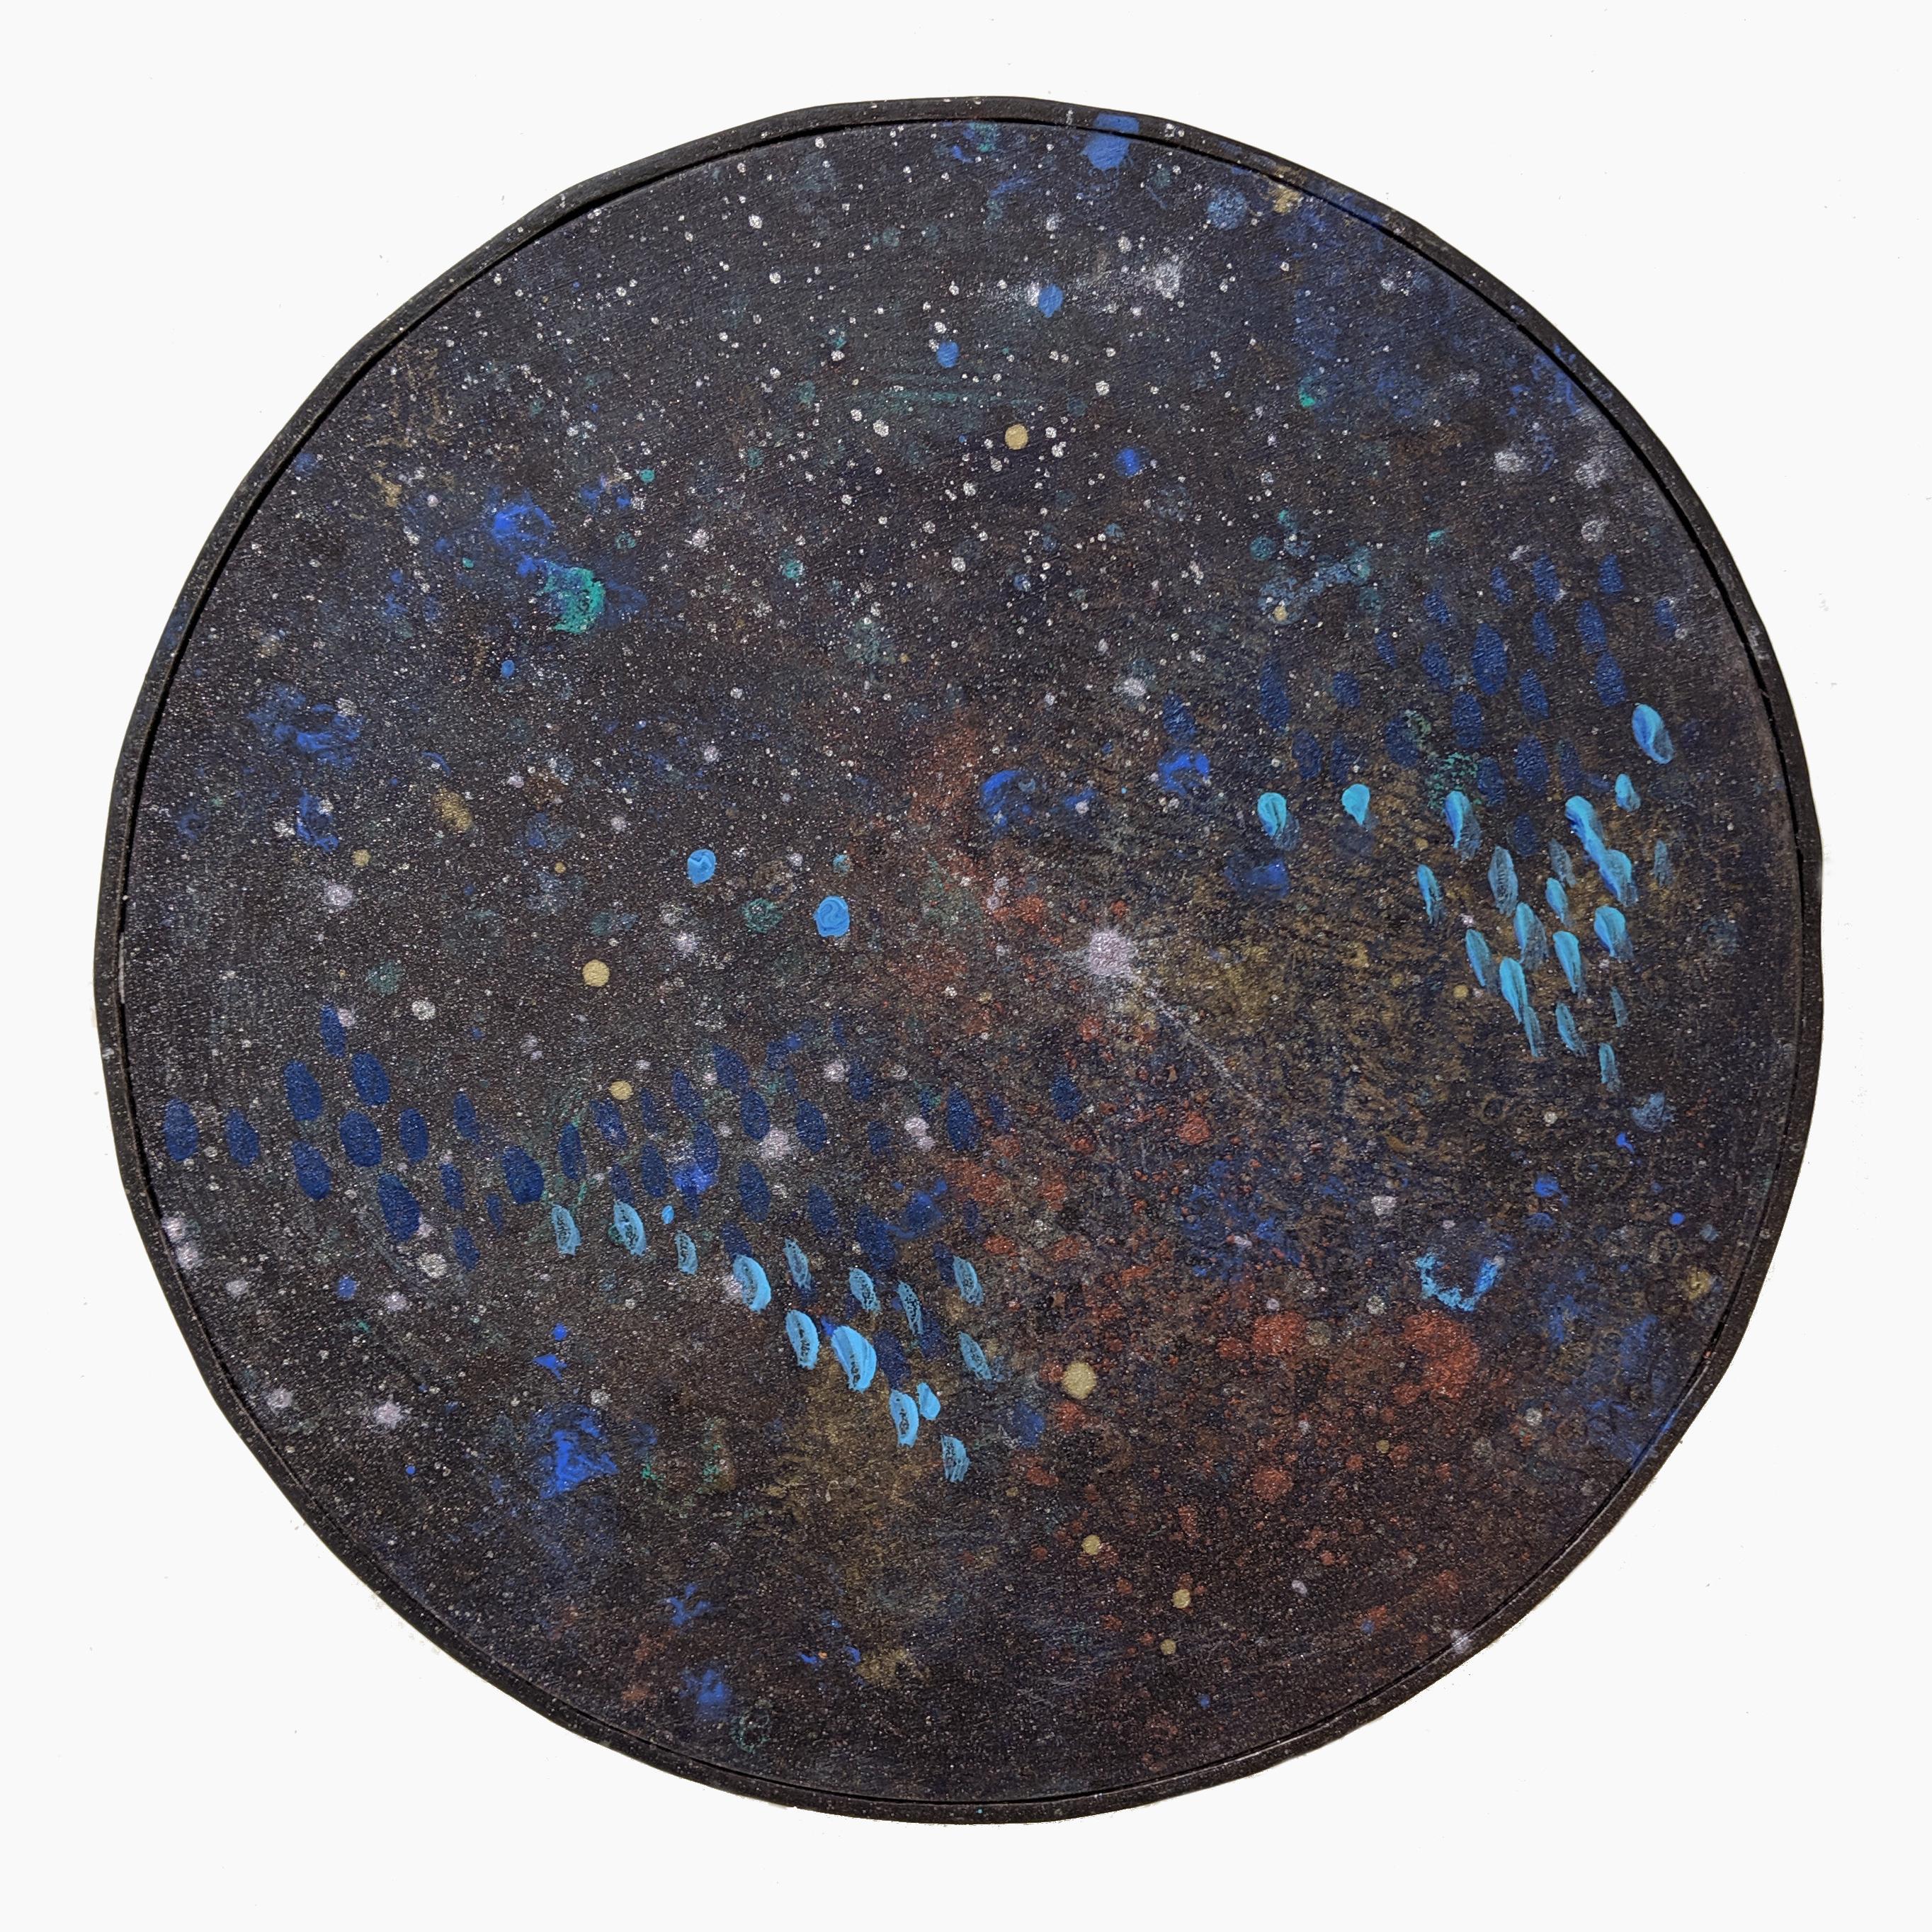 Abstract Sculpture Corrina Sephora - « Somewhere Between the Deep Blue Sea and the Edge of the Universe II » (Un coin entre la mer bleu profond et le bord de l'univers) - Nevelson